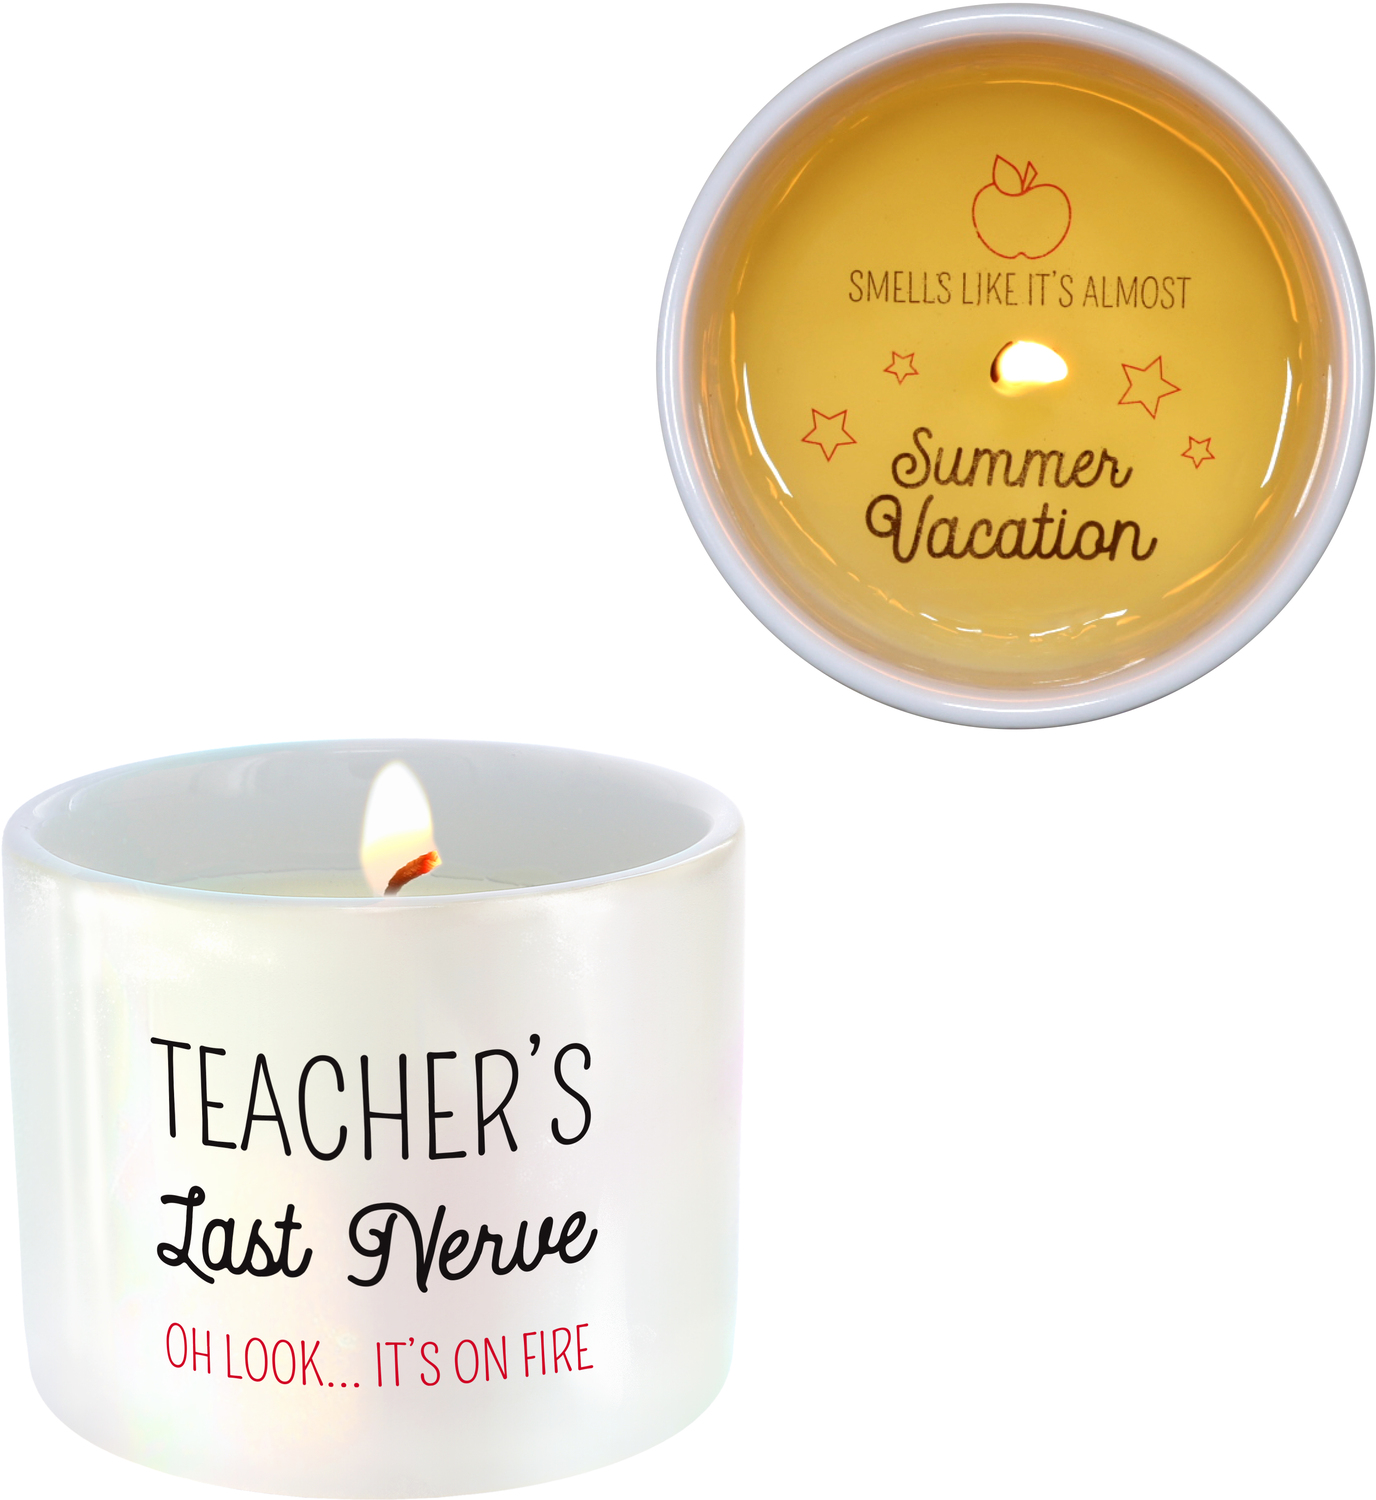 Teacher's Last Nerve by Teachable Moments - Teacher's Last Nerve - 8 oz - 100% Soy Wax Reveal Candle
Scent: Tranquility